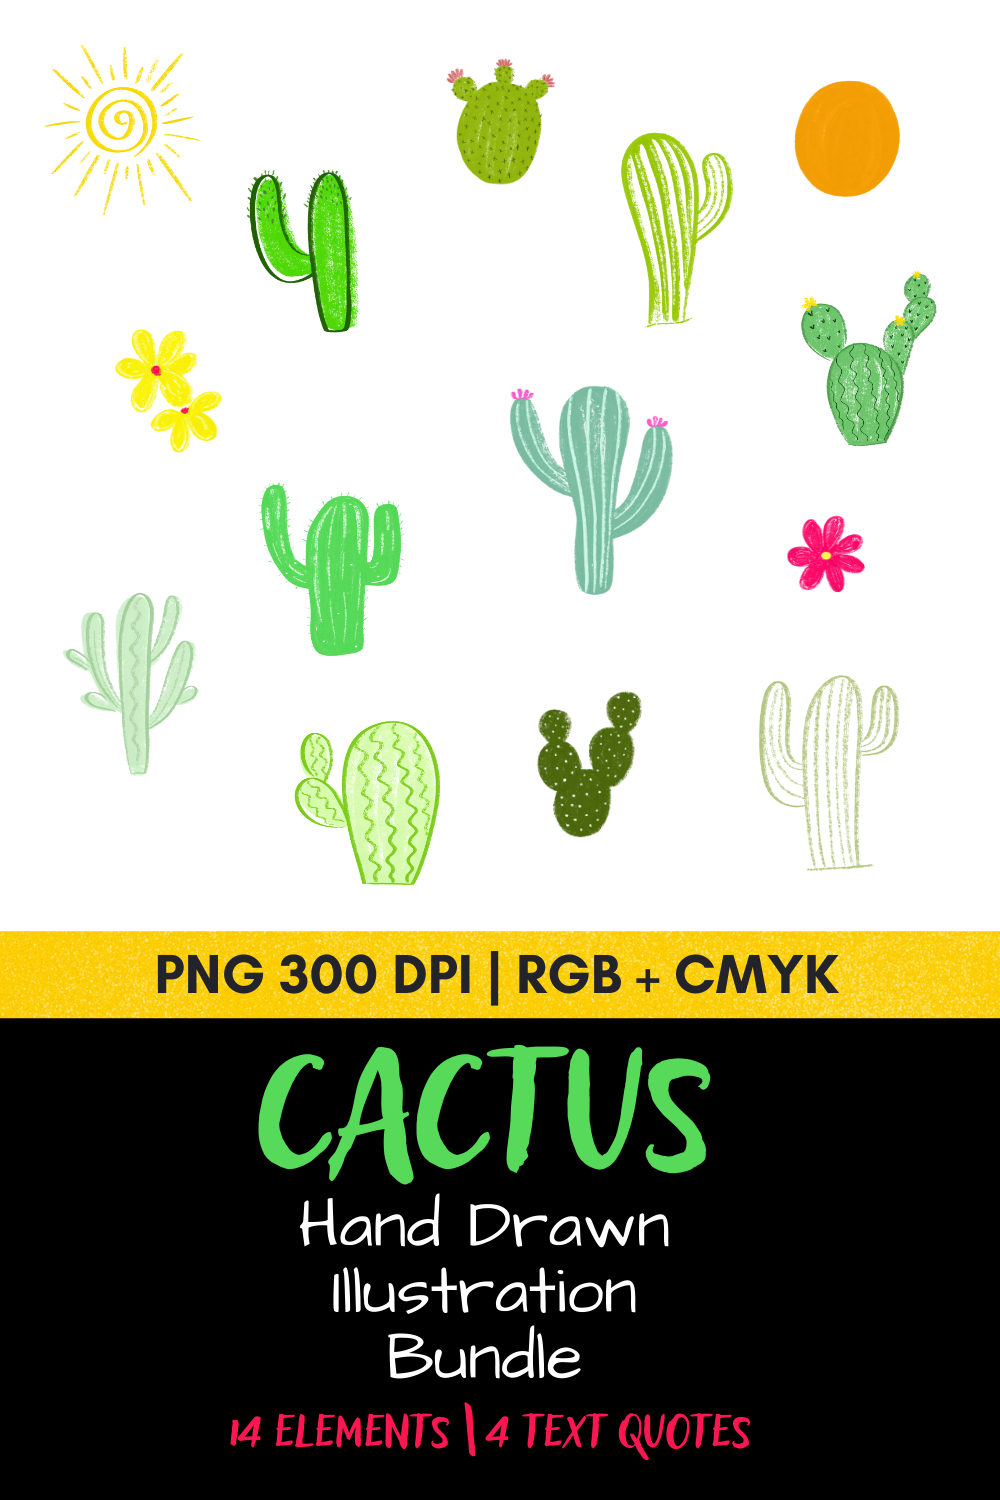 cactus hand drawn illustration bundle icon clipart text elements png rgb cmyk print web screen